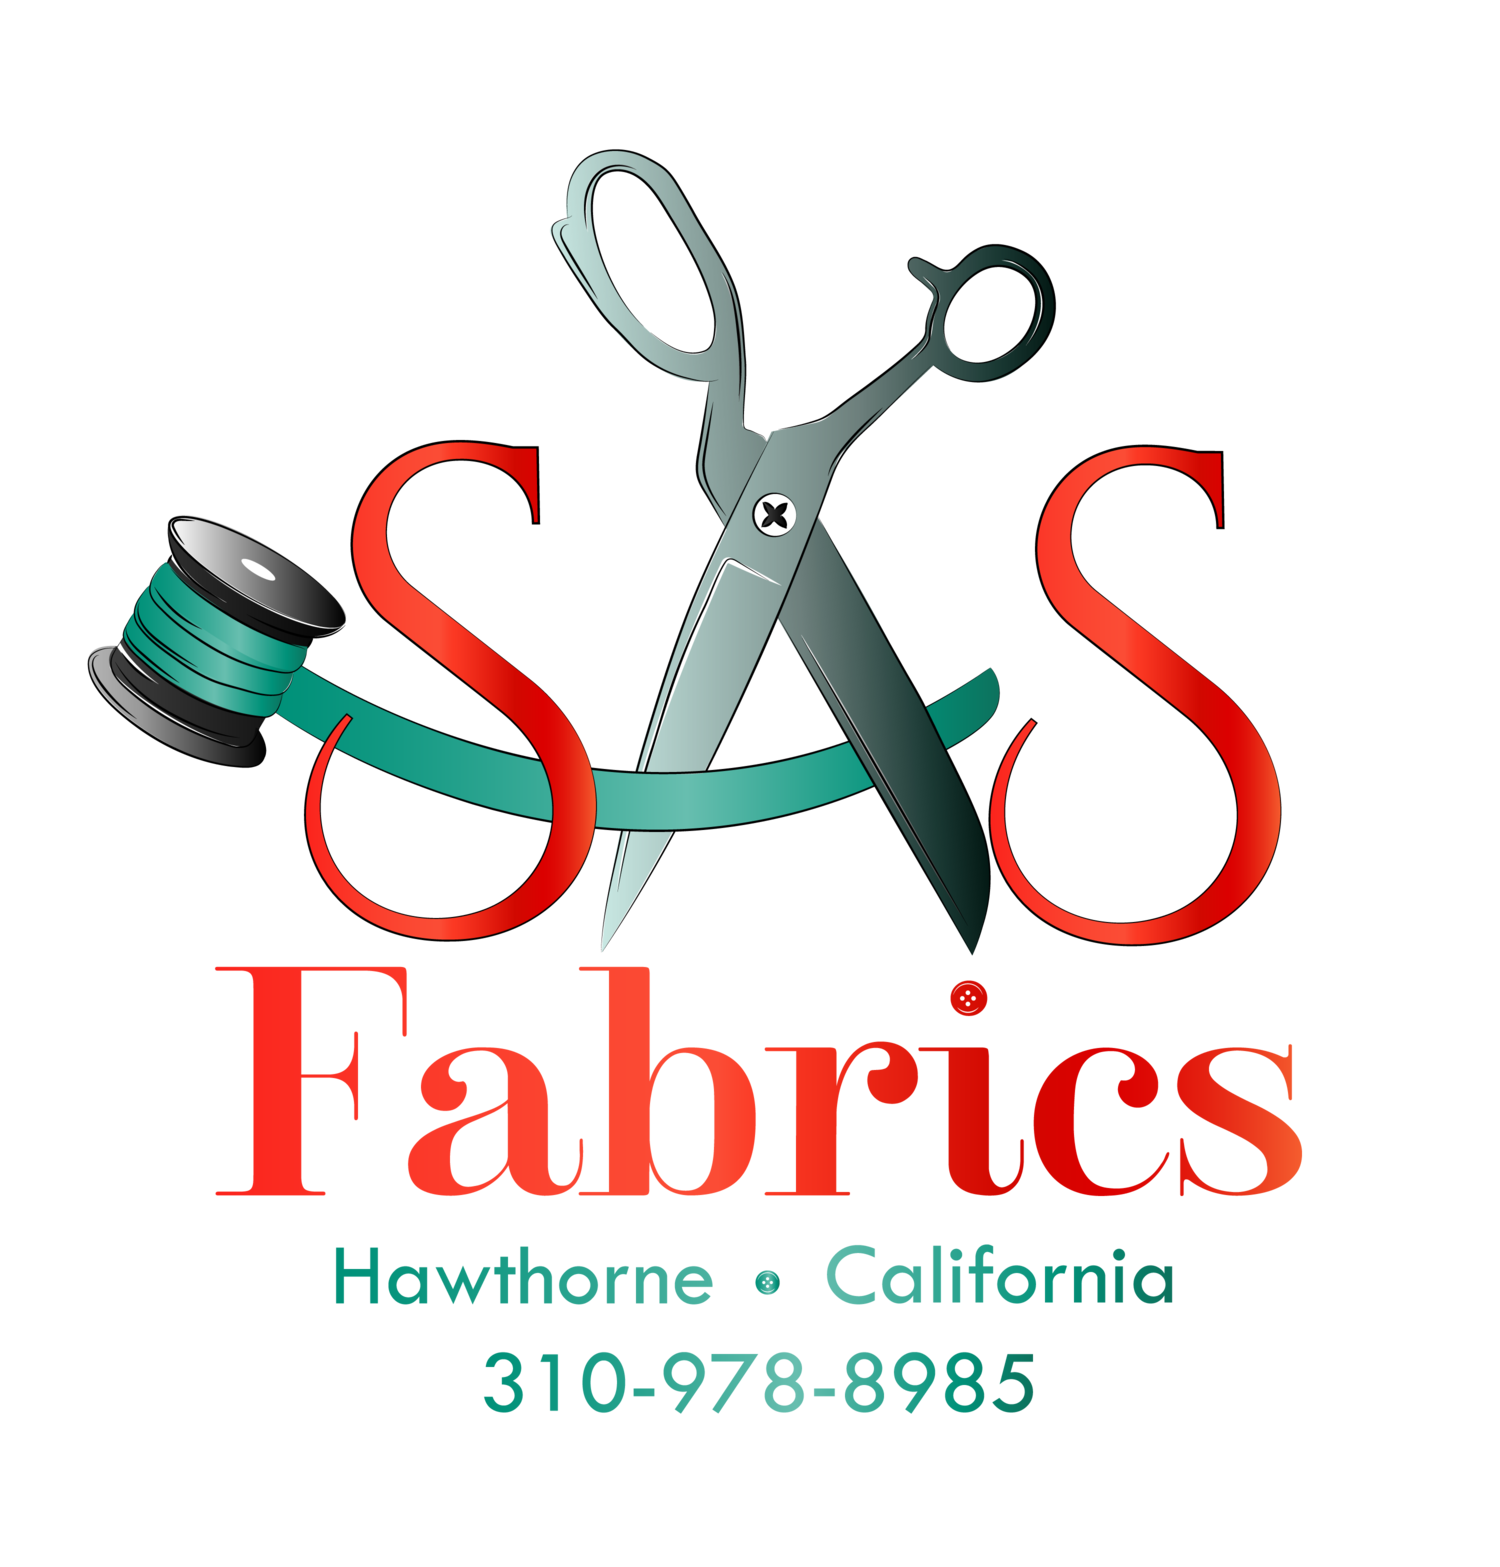 SAS Fabrics California